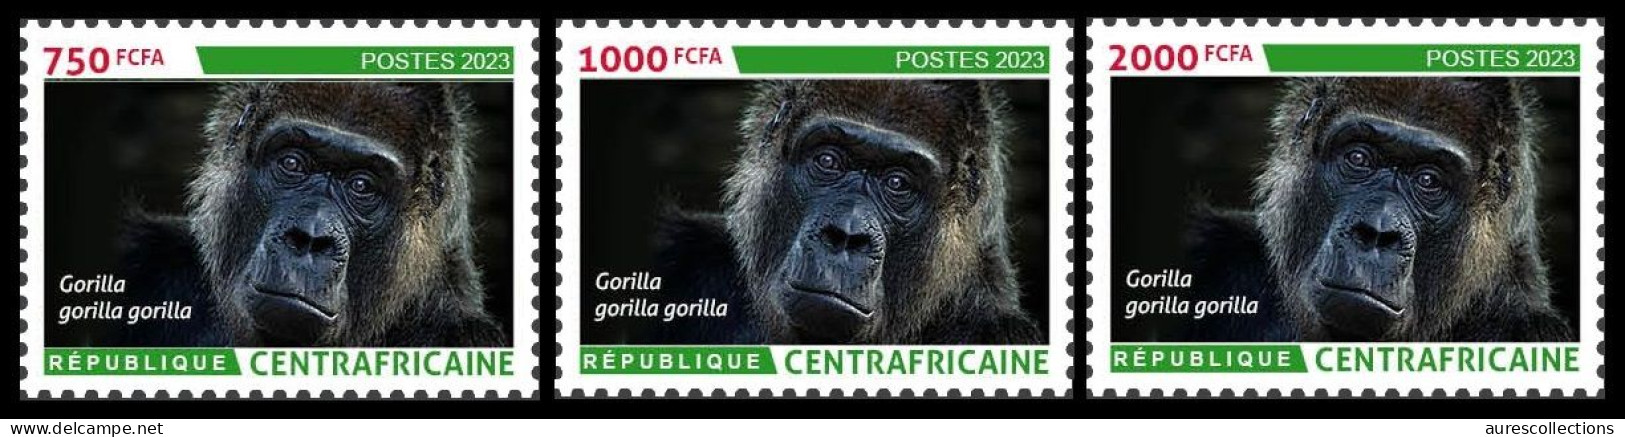 CENTRAL AFRICAN CENTRAFRICAINE 2023 SET 3V 750F 1000F 2000F- GORILLAS GORILLA GORILLE GORILLES APES - BIODIVERSITY - MNH - Gorilas